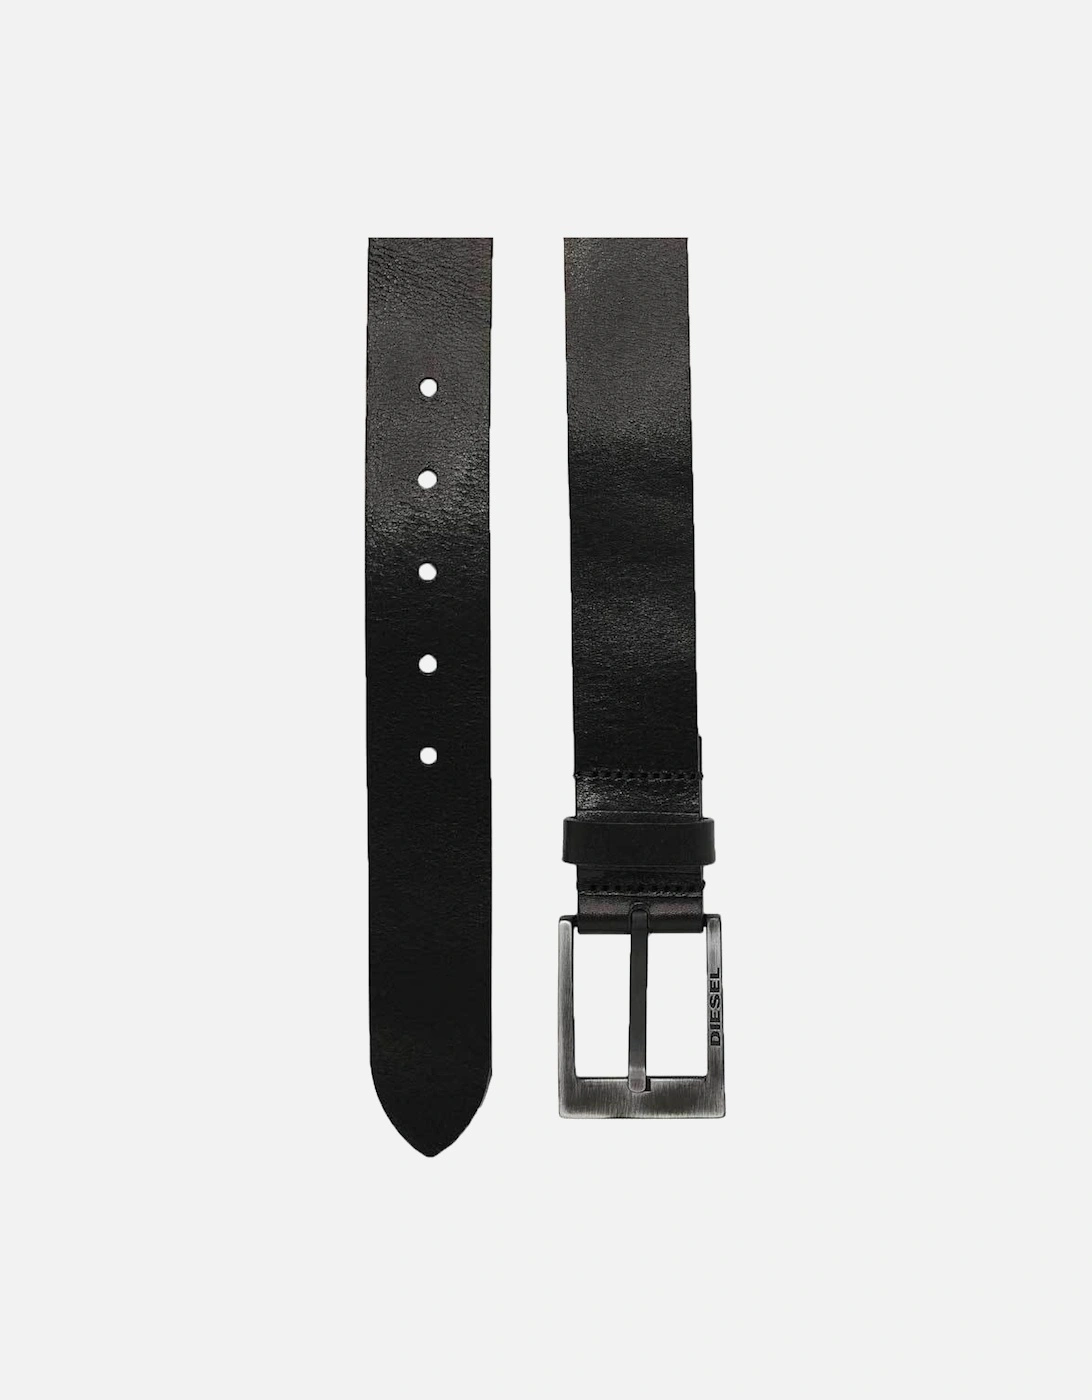 Spazzo leather belt - Black, 3 of 2